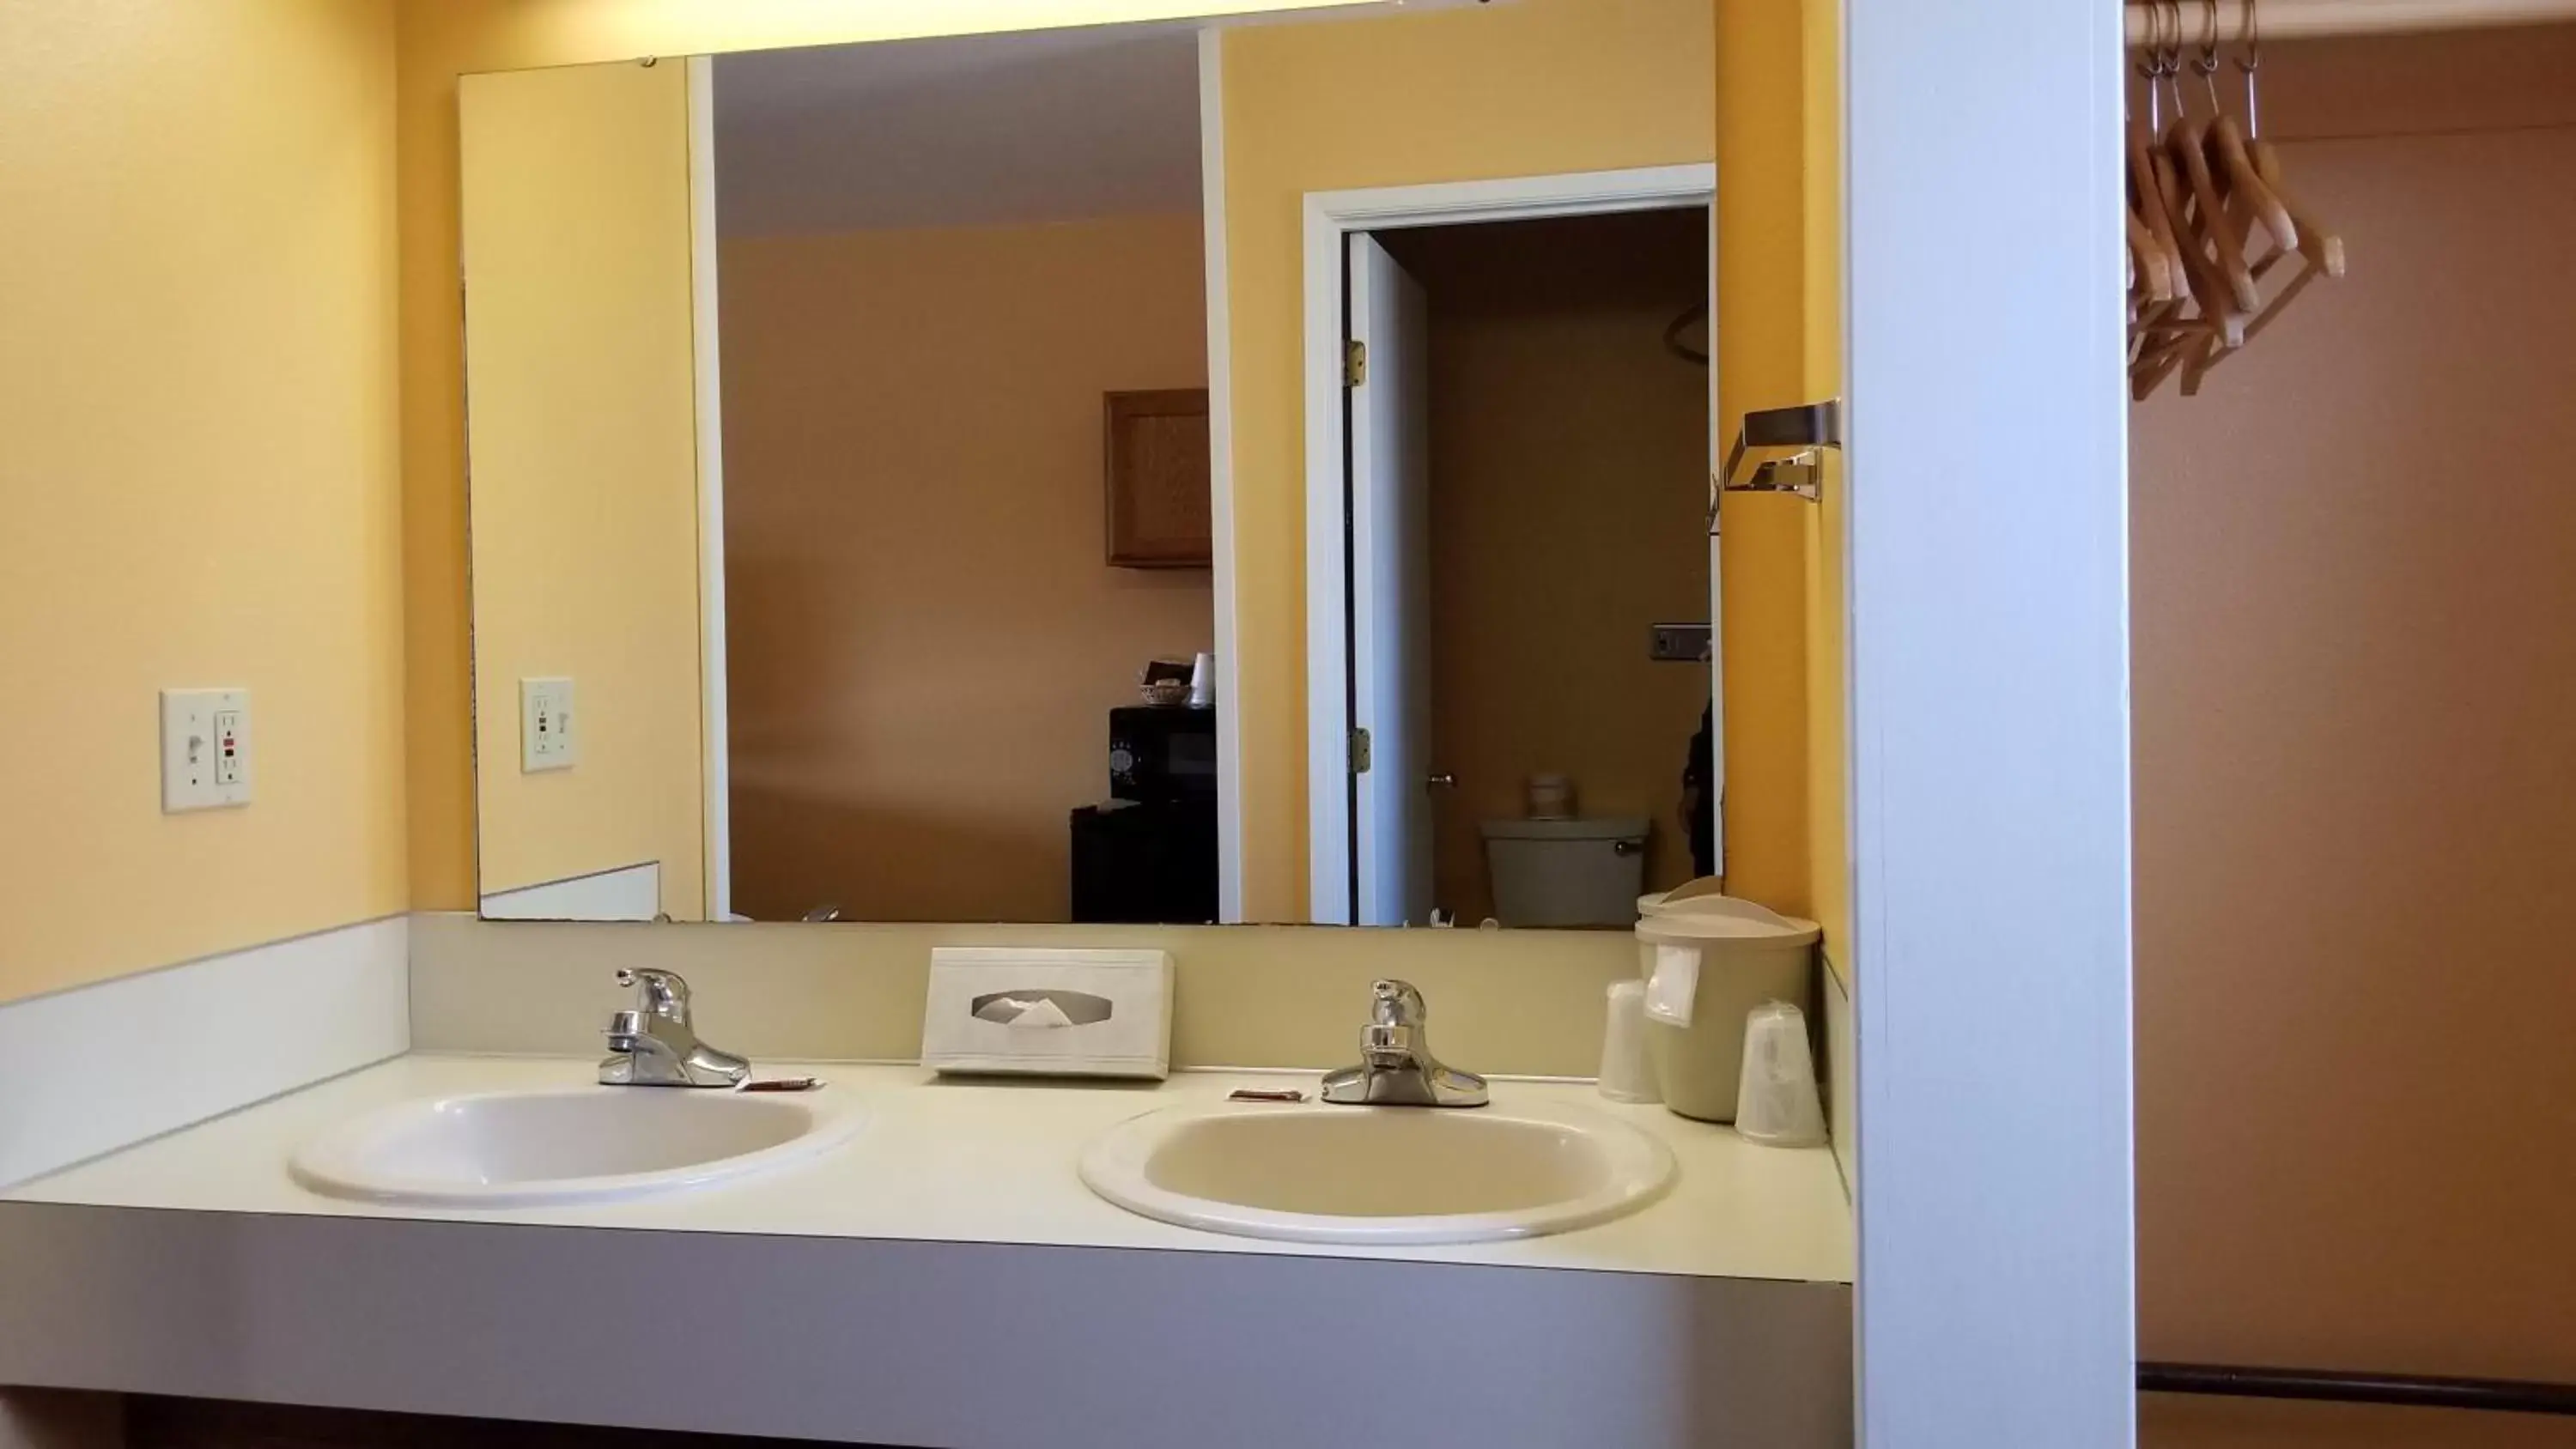 Bathroom in Forks Motel